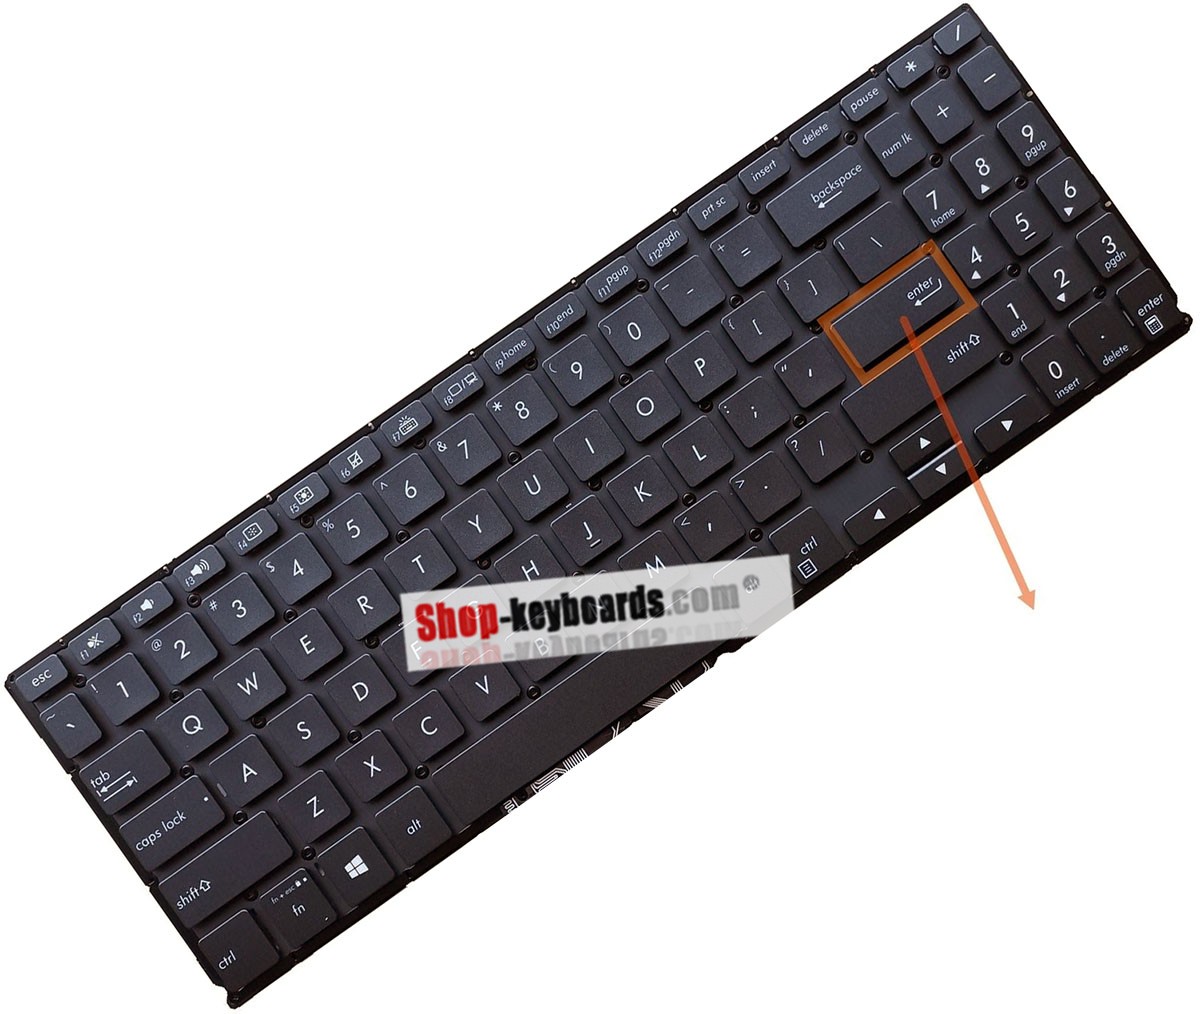 Asus 0KNB0-563BIT00 Keyboard replacement